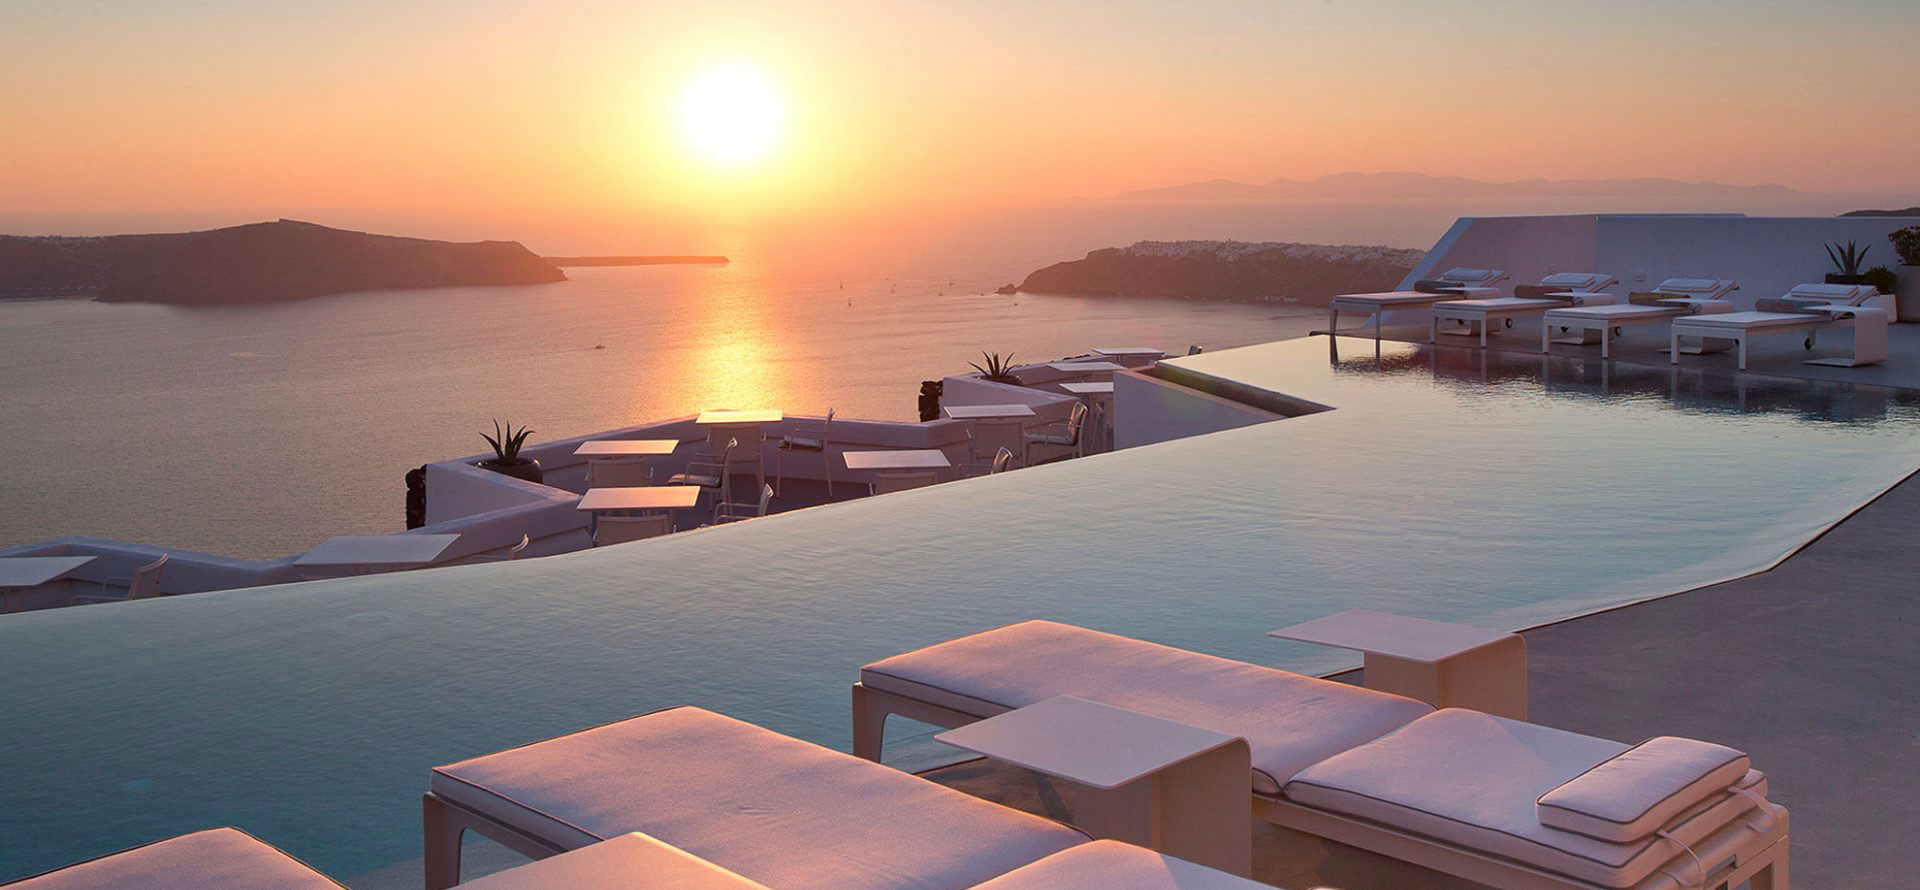 Santorini greece all inclusive resort and sunset.